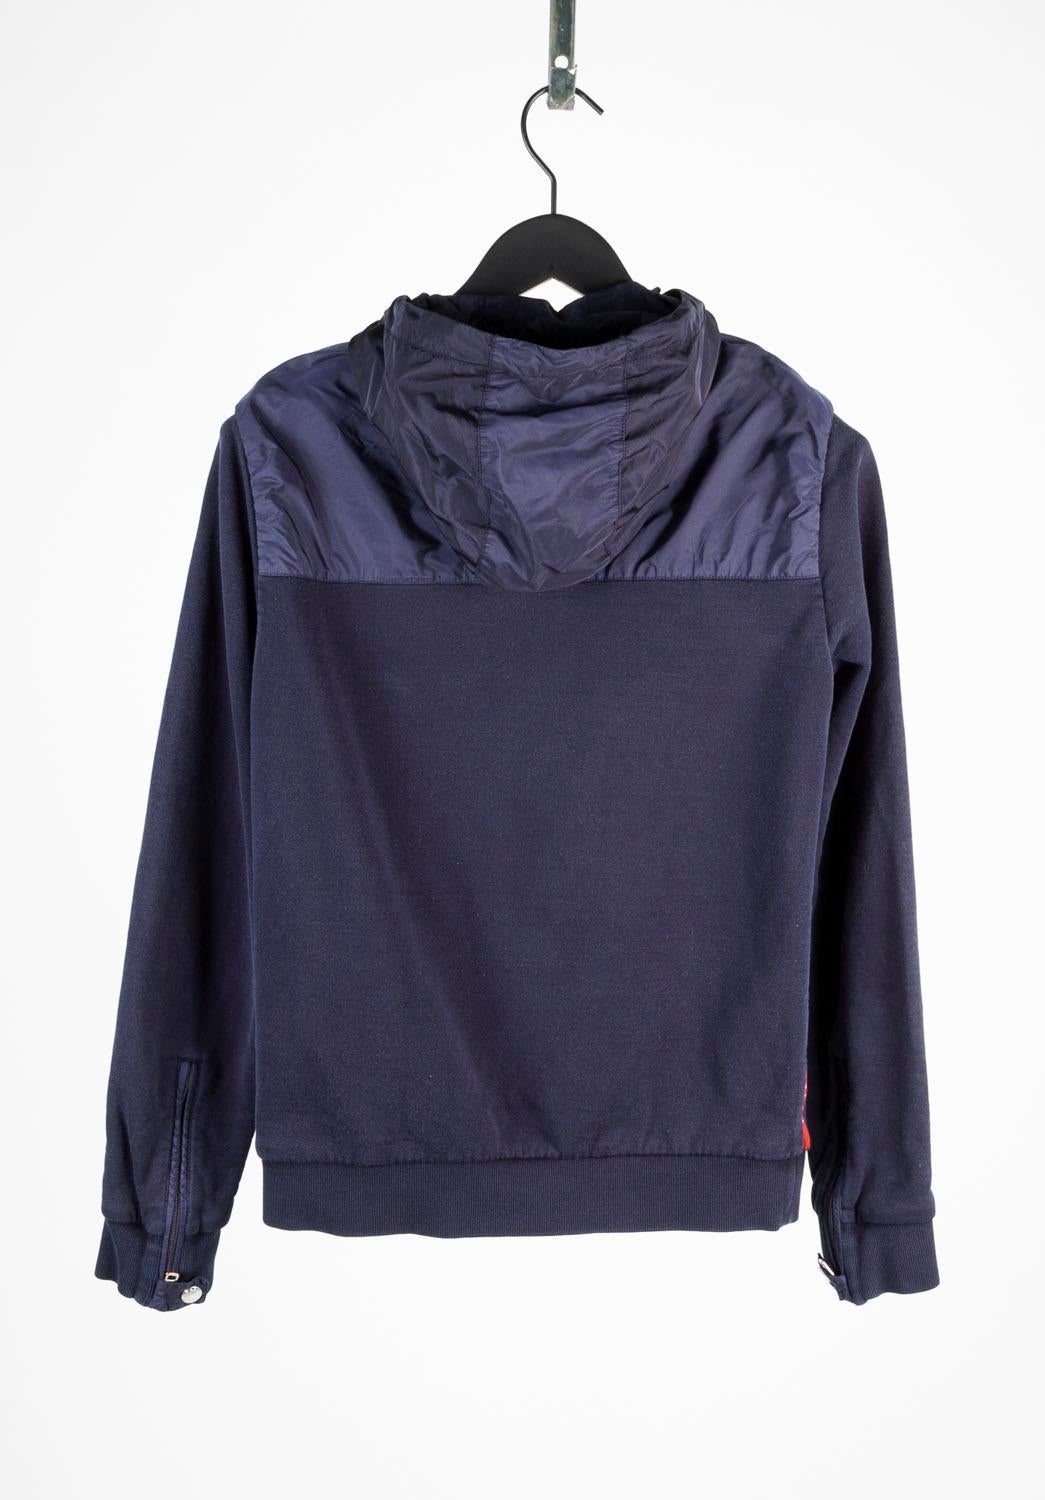  Prada Homme Veste Sweatshirt Light Zippée Hooded Taille M, S662 en vente 1